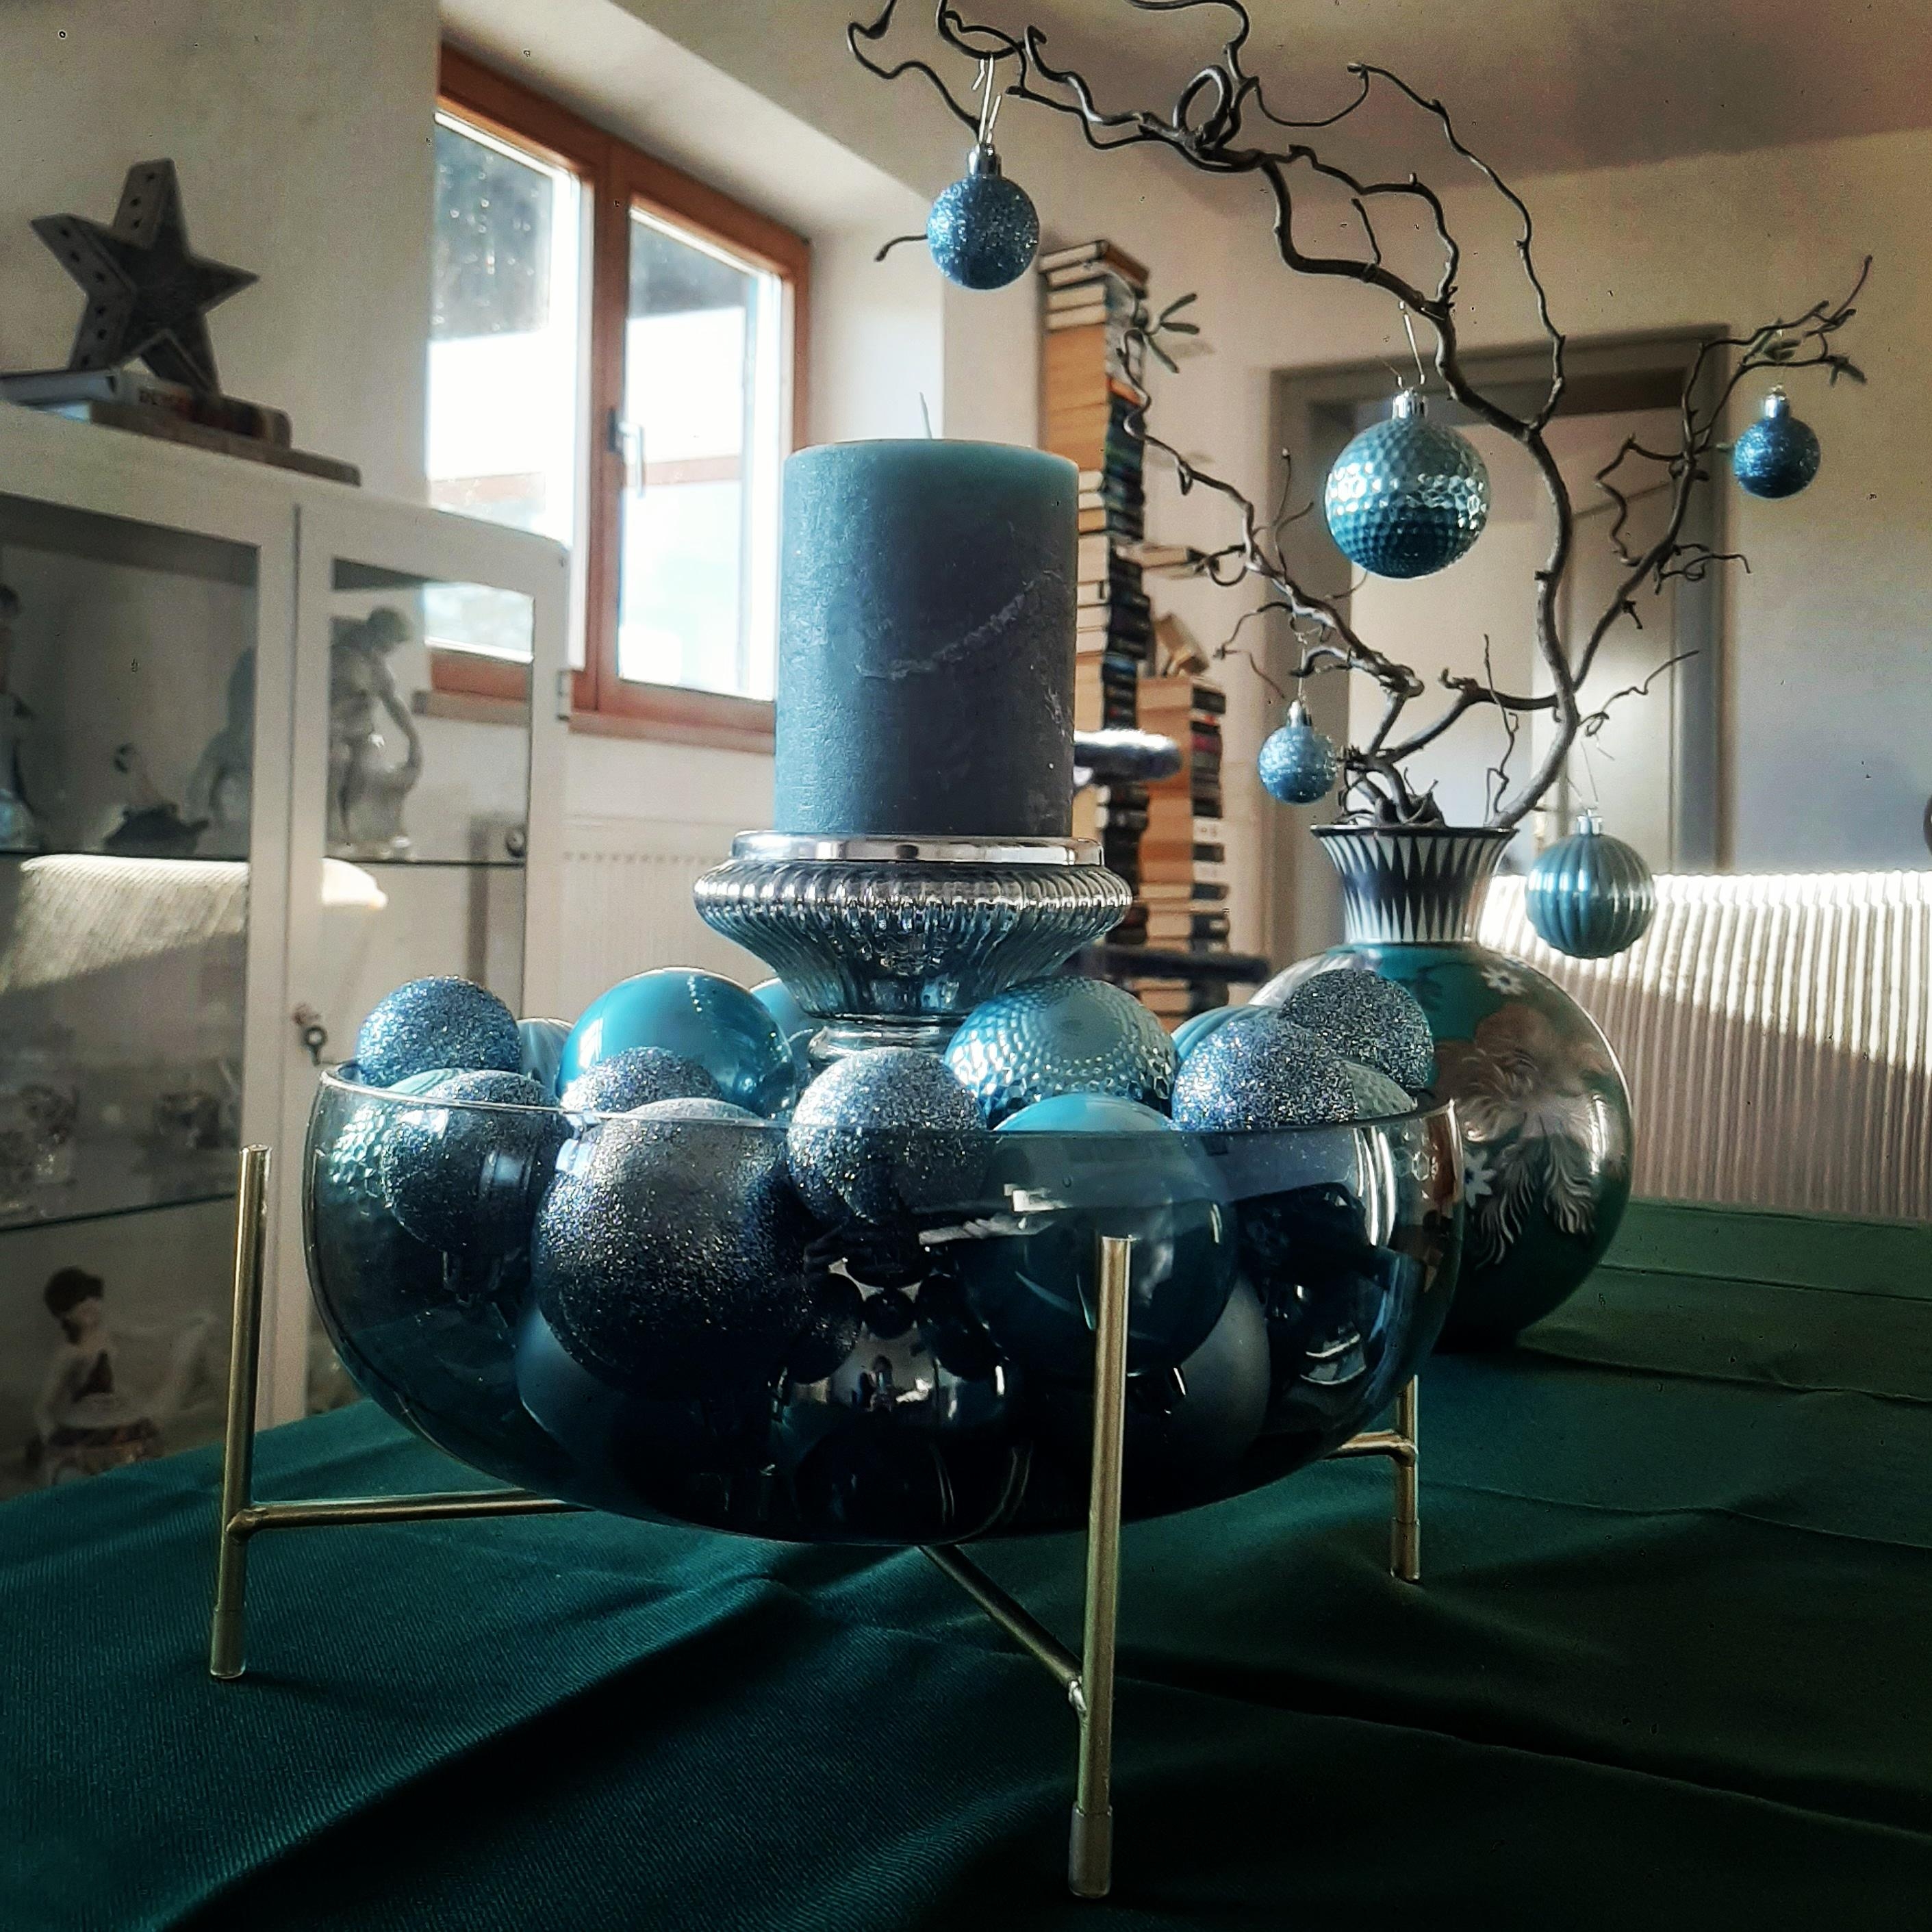 Feeling blue. / #weihnachtsdeko #livingroom #wohnzimmer #xmas #rosenthal